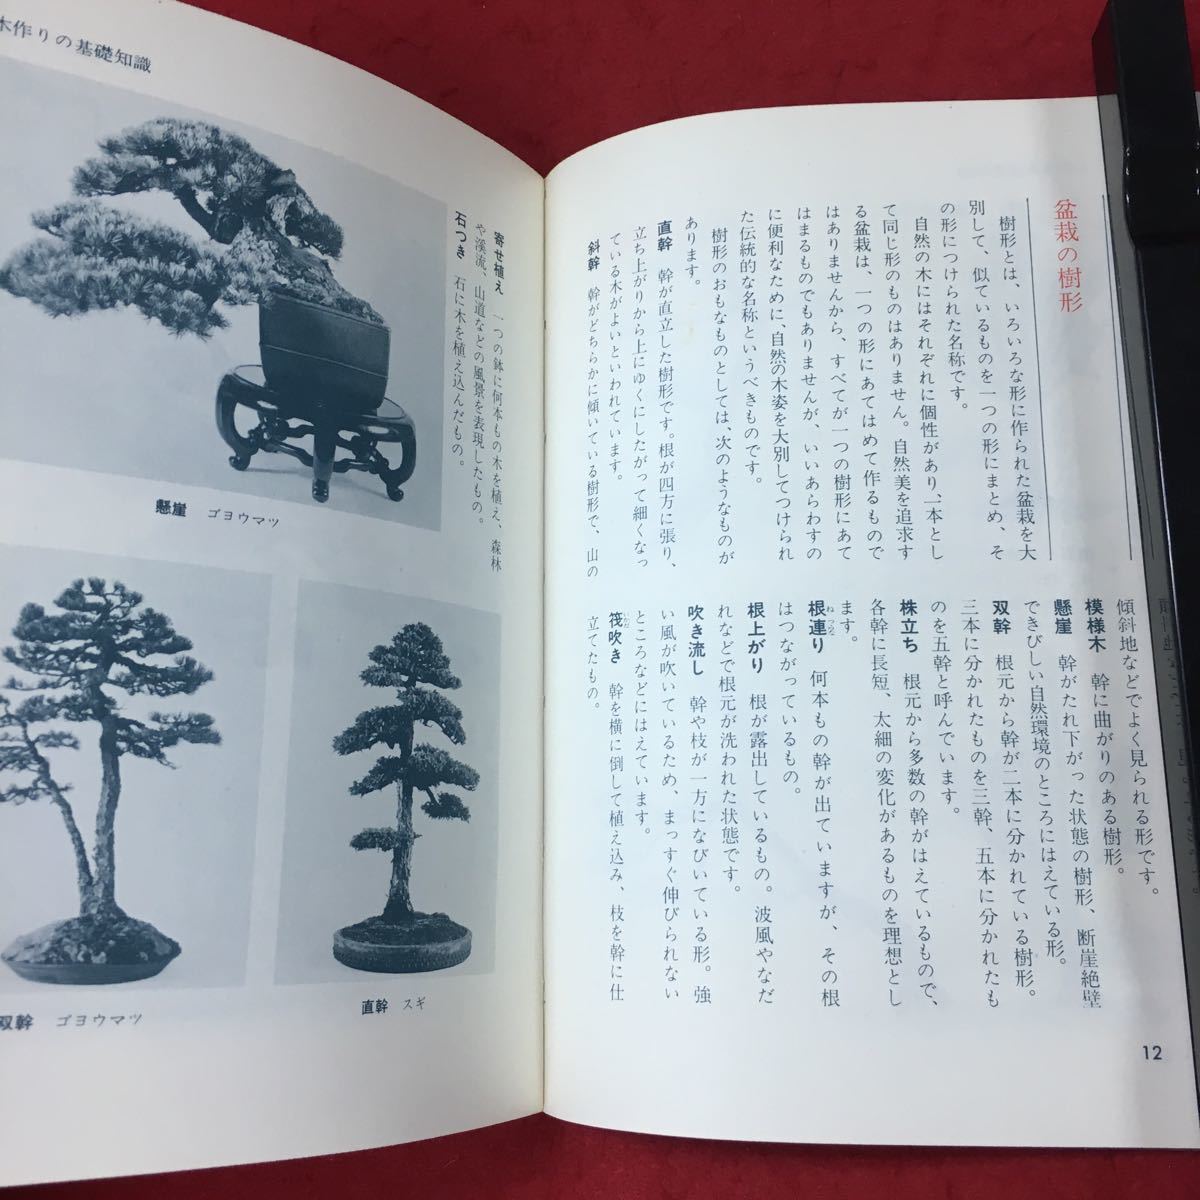 c-049 *4 illustration bonsai. tree making gardening introduction Showa era 53 year 4 month 5 day no. 1. issue ... . company gardening bonsai materials gardening hobby guidance red matsusgi beech 